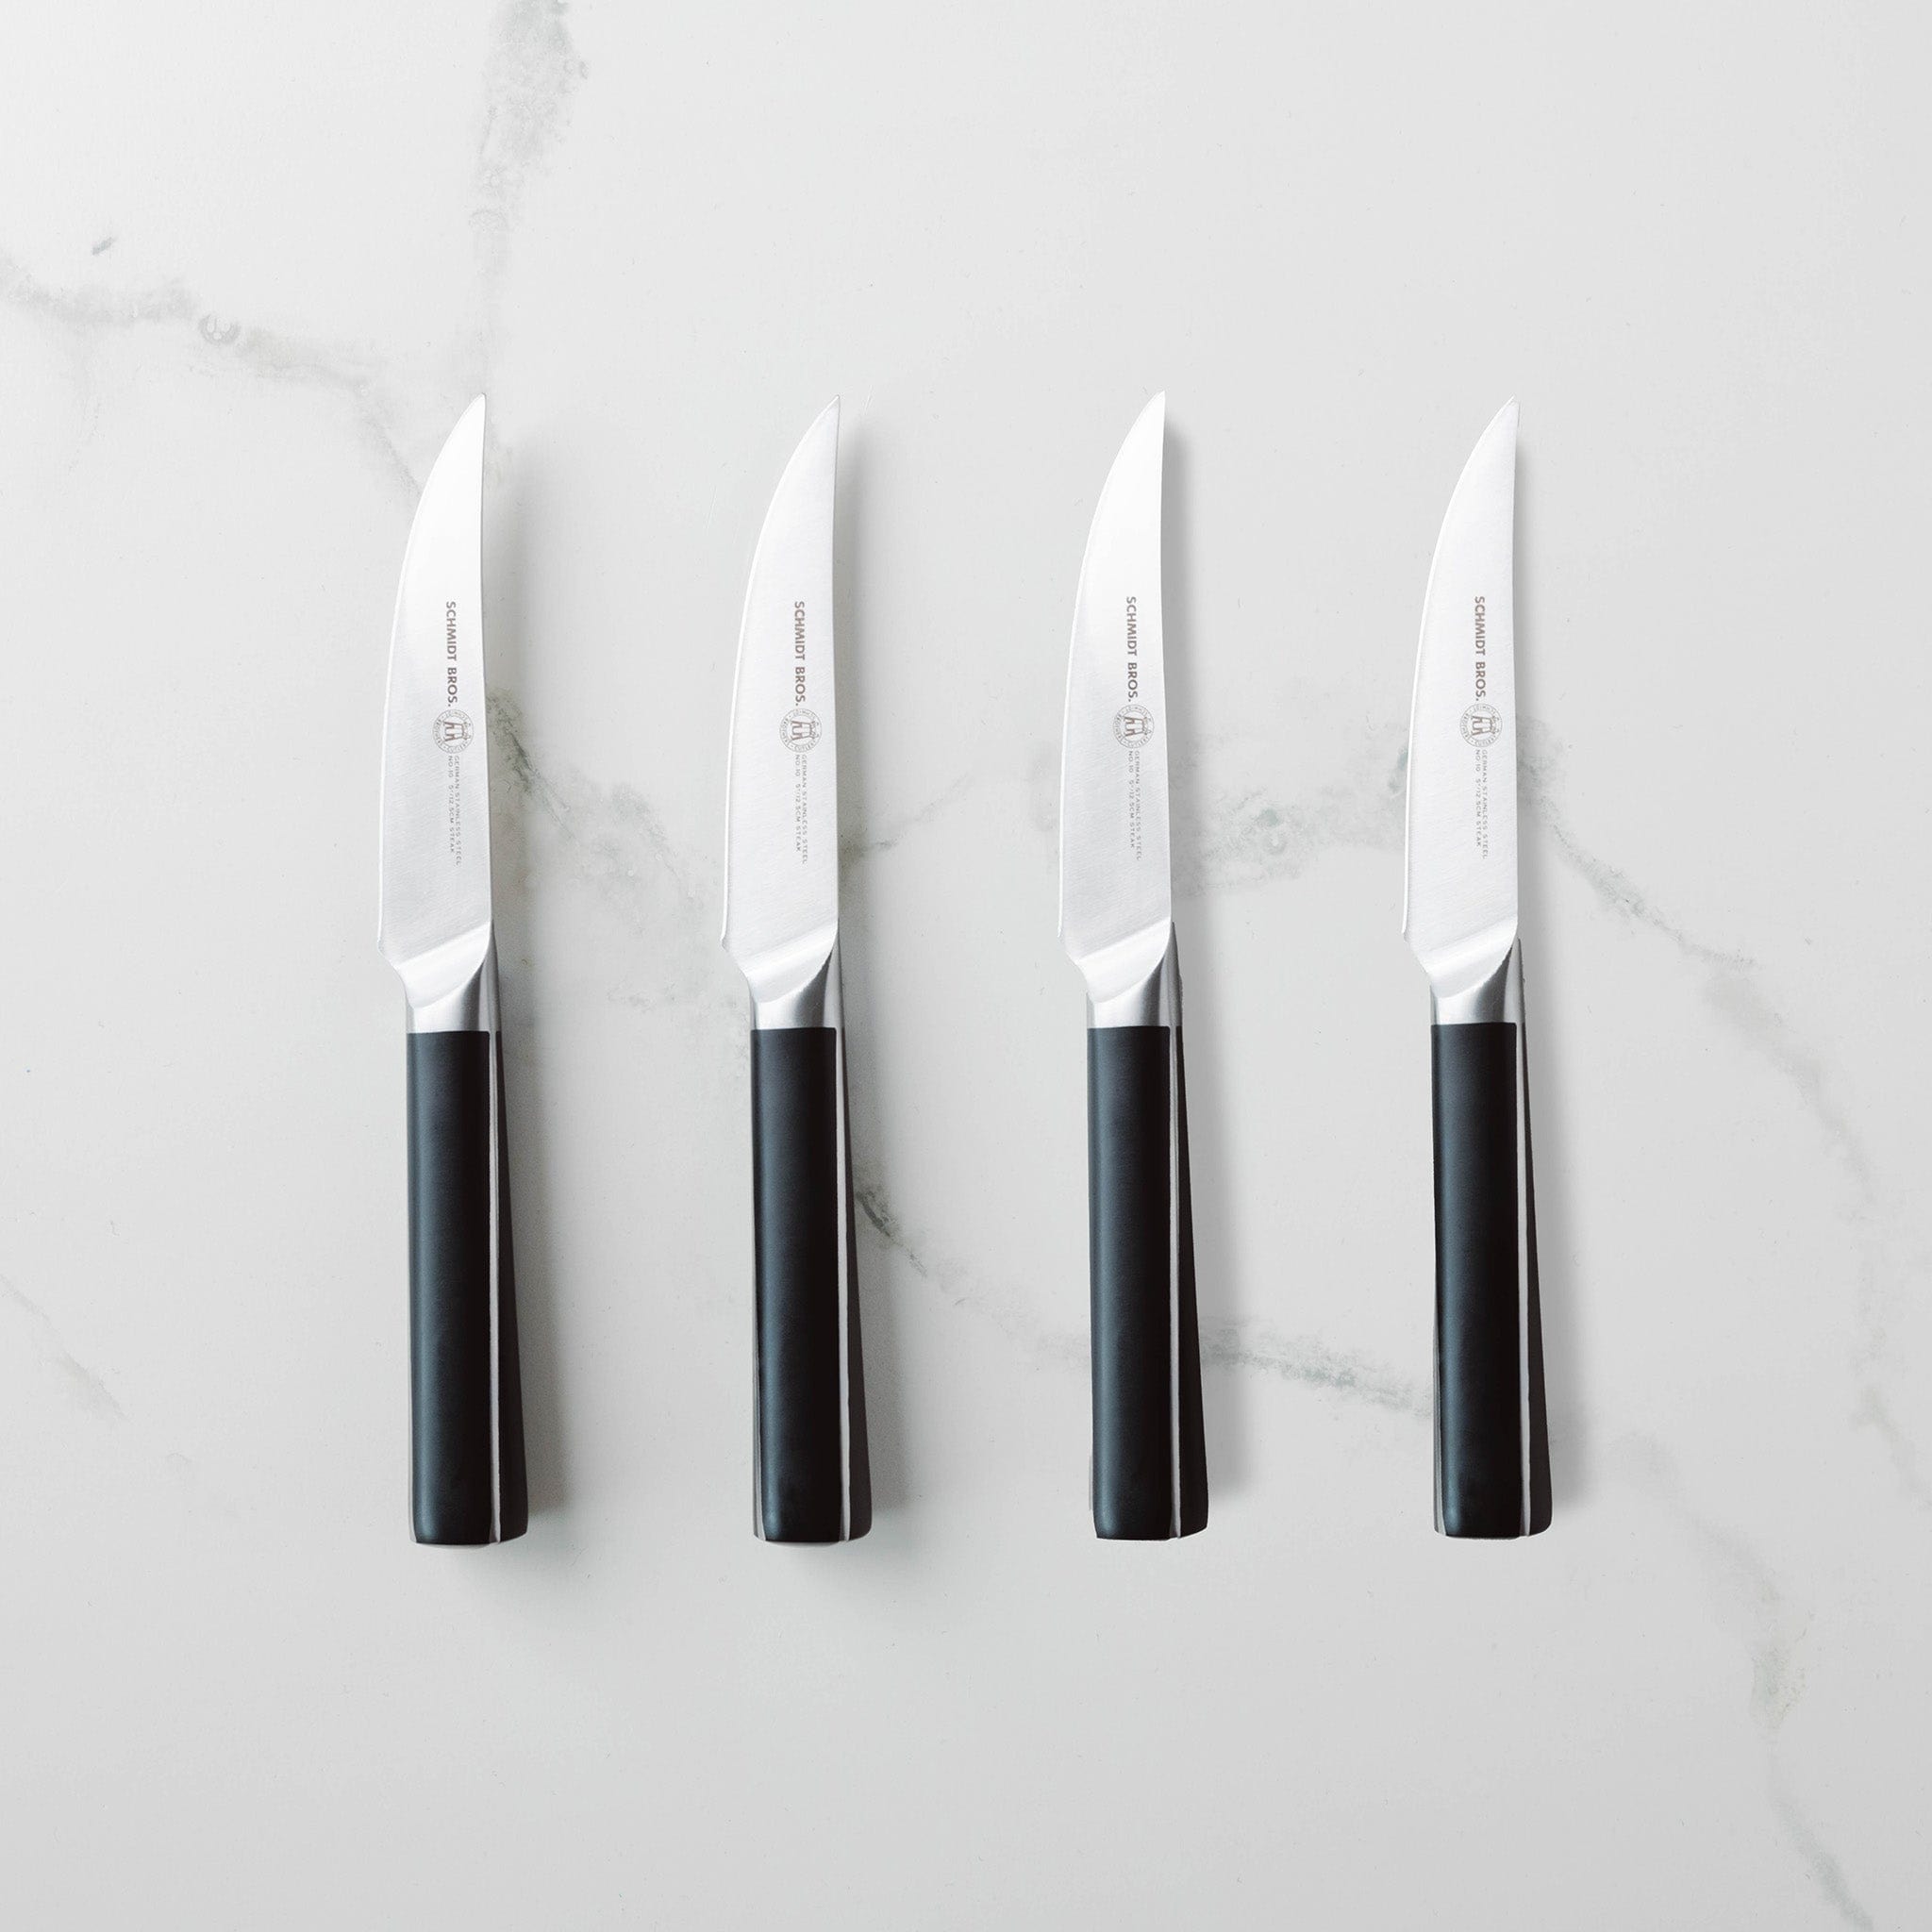 Schmidt Brothers Crosstown 4-Piece Steak Knife Set + Reviews